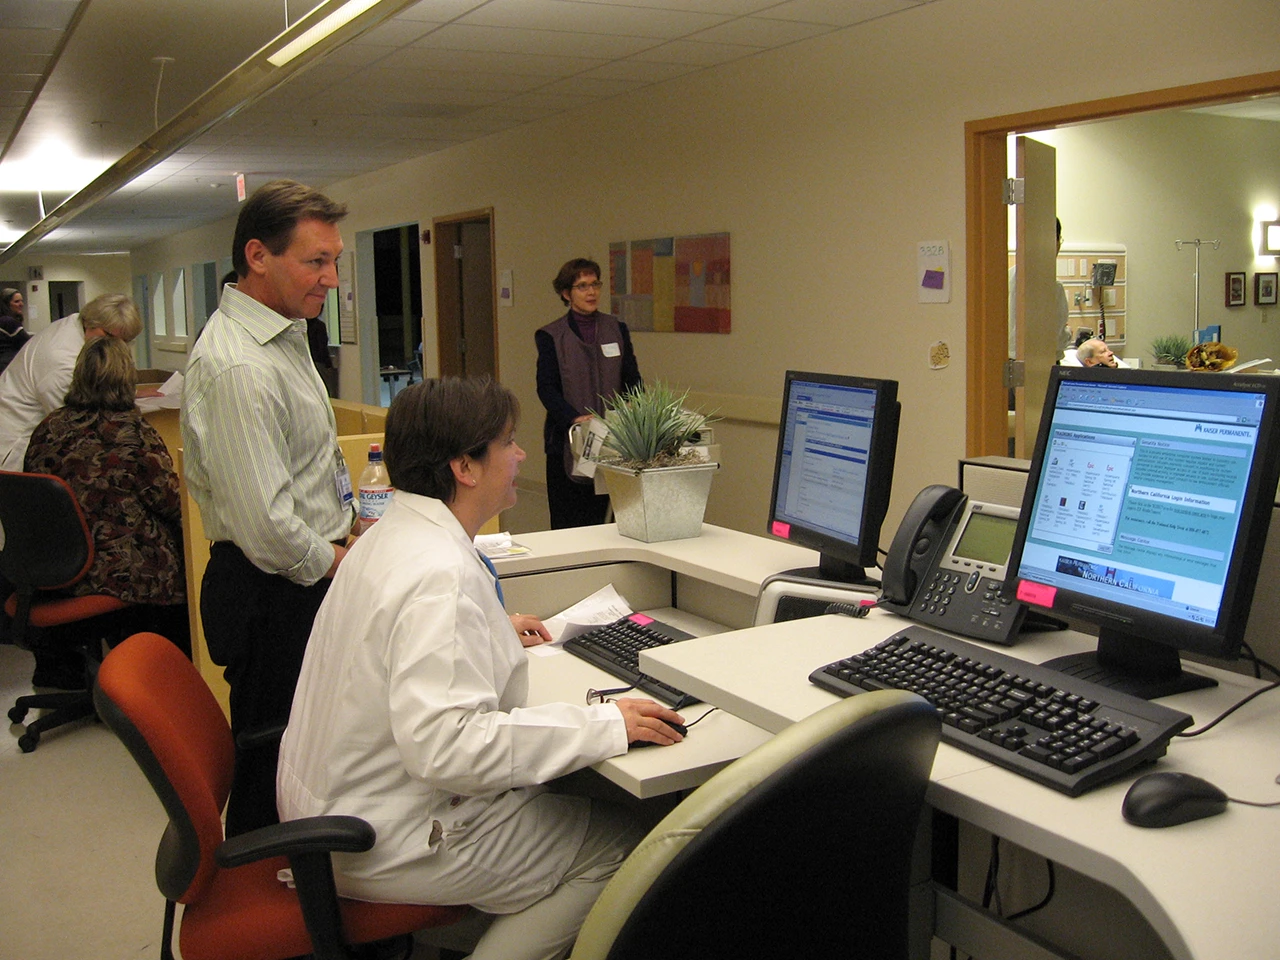 Administrative staff looking at computer screen monitor